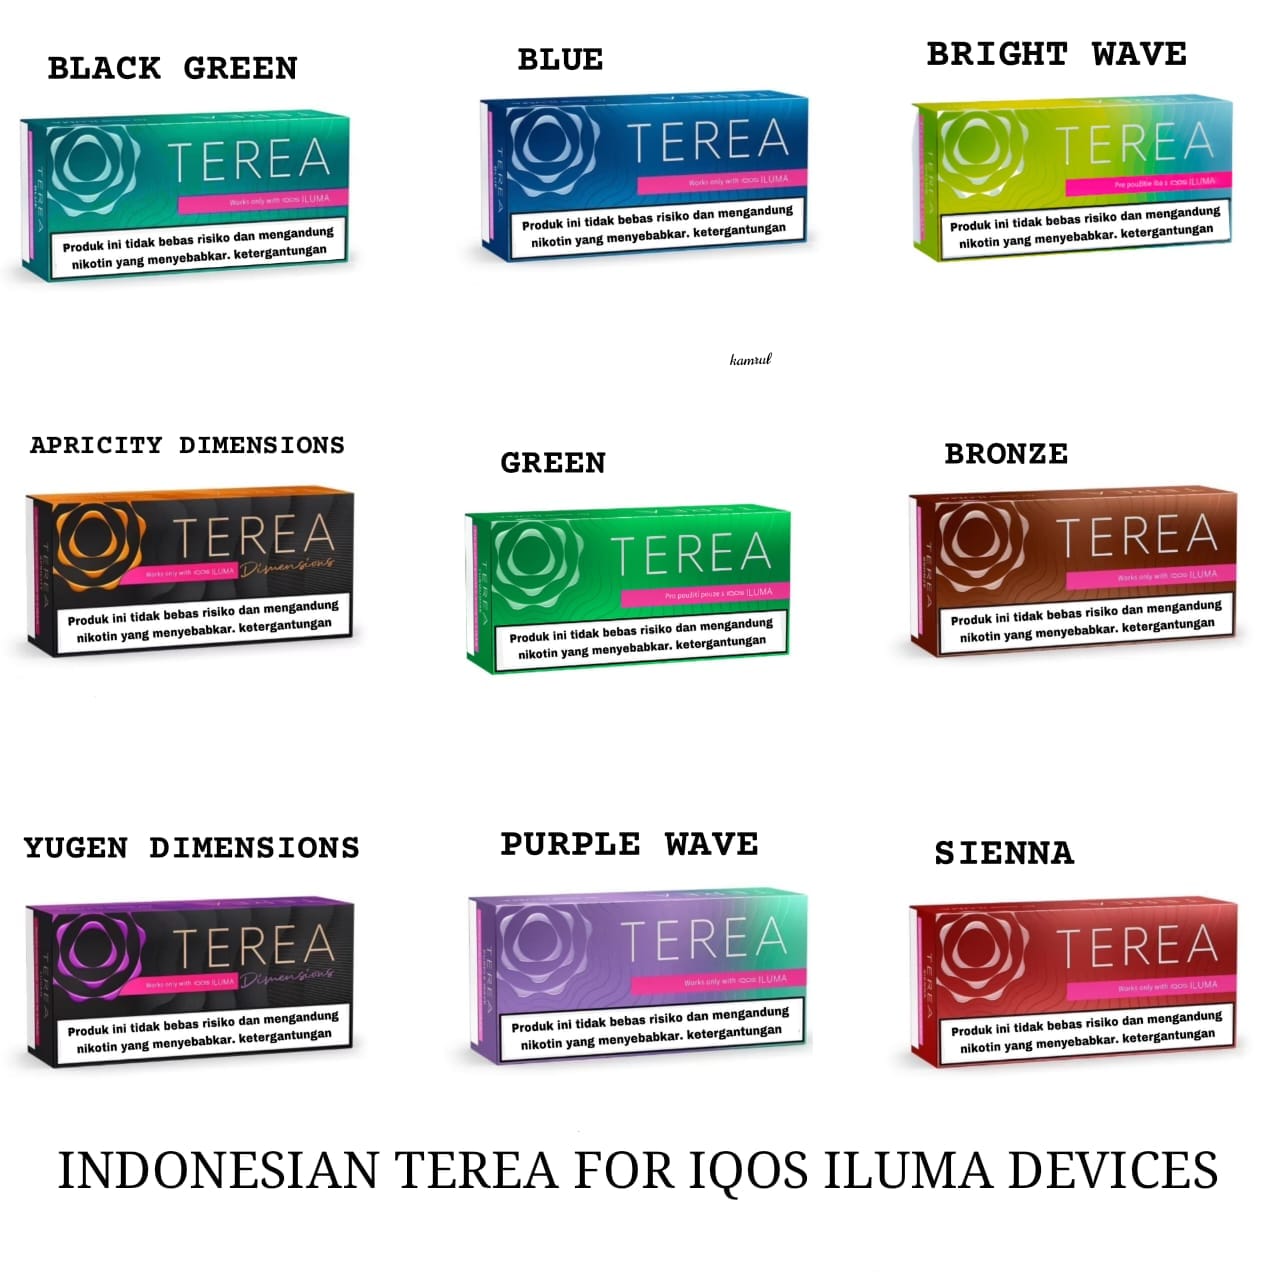 New IQOS Terea Indonesian (Terea Blue)